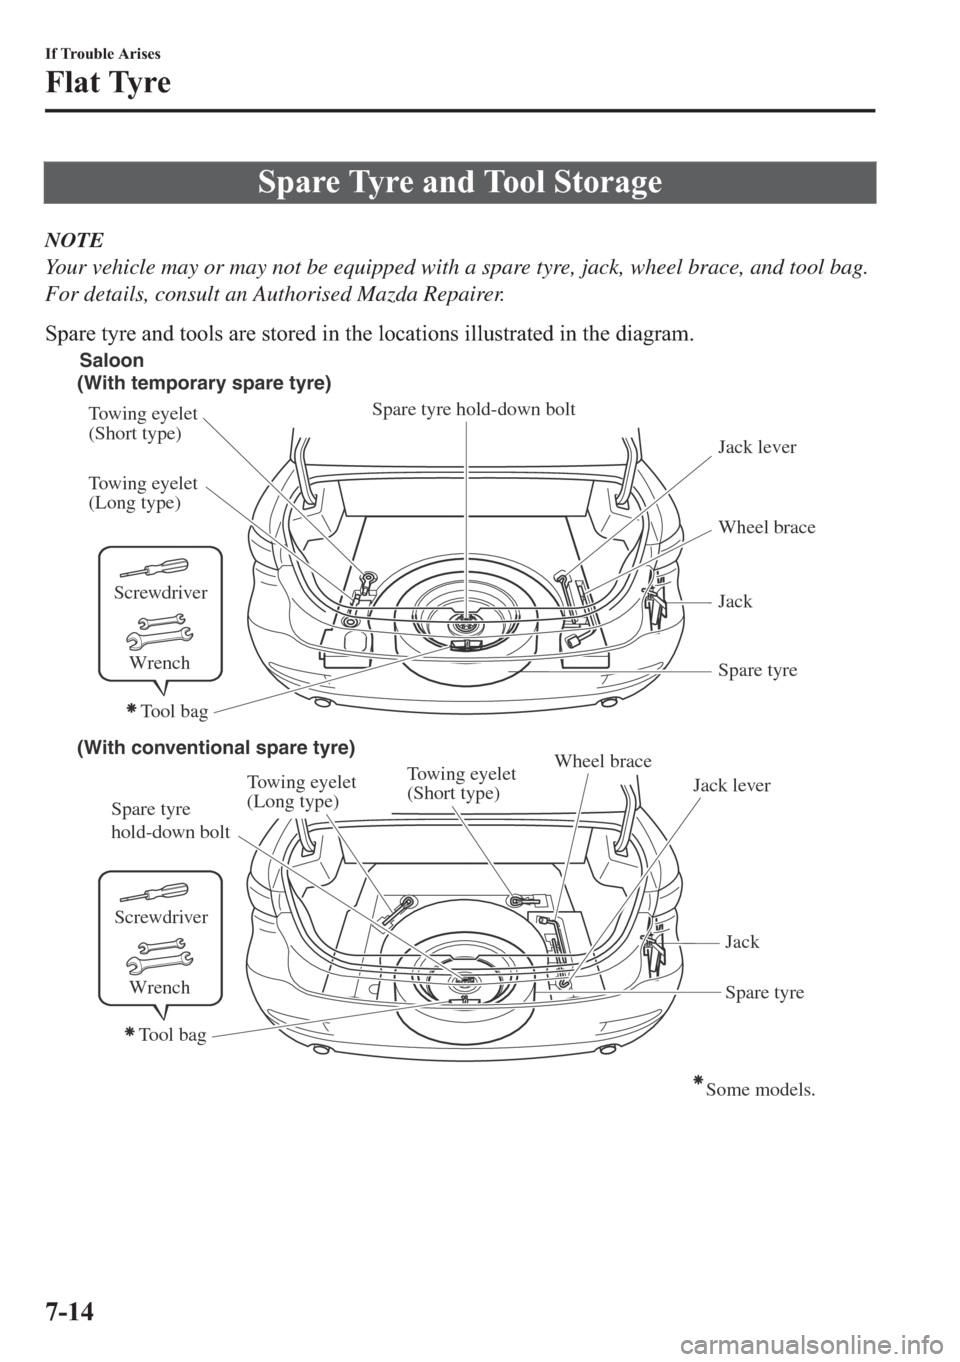 MAZDA MODEL 6 2018  Owners Manual (in English) �6�S�D�U�H��7�\�U�H��D�Q�G��7�R�R�O��6�W�R�U�D�J�H
NOTE
Your vehicle may or may not be equipped with a spare tyre, jack, wheel brace, and tool bag.
For details, consult an Authorised Mazda Repaire